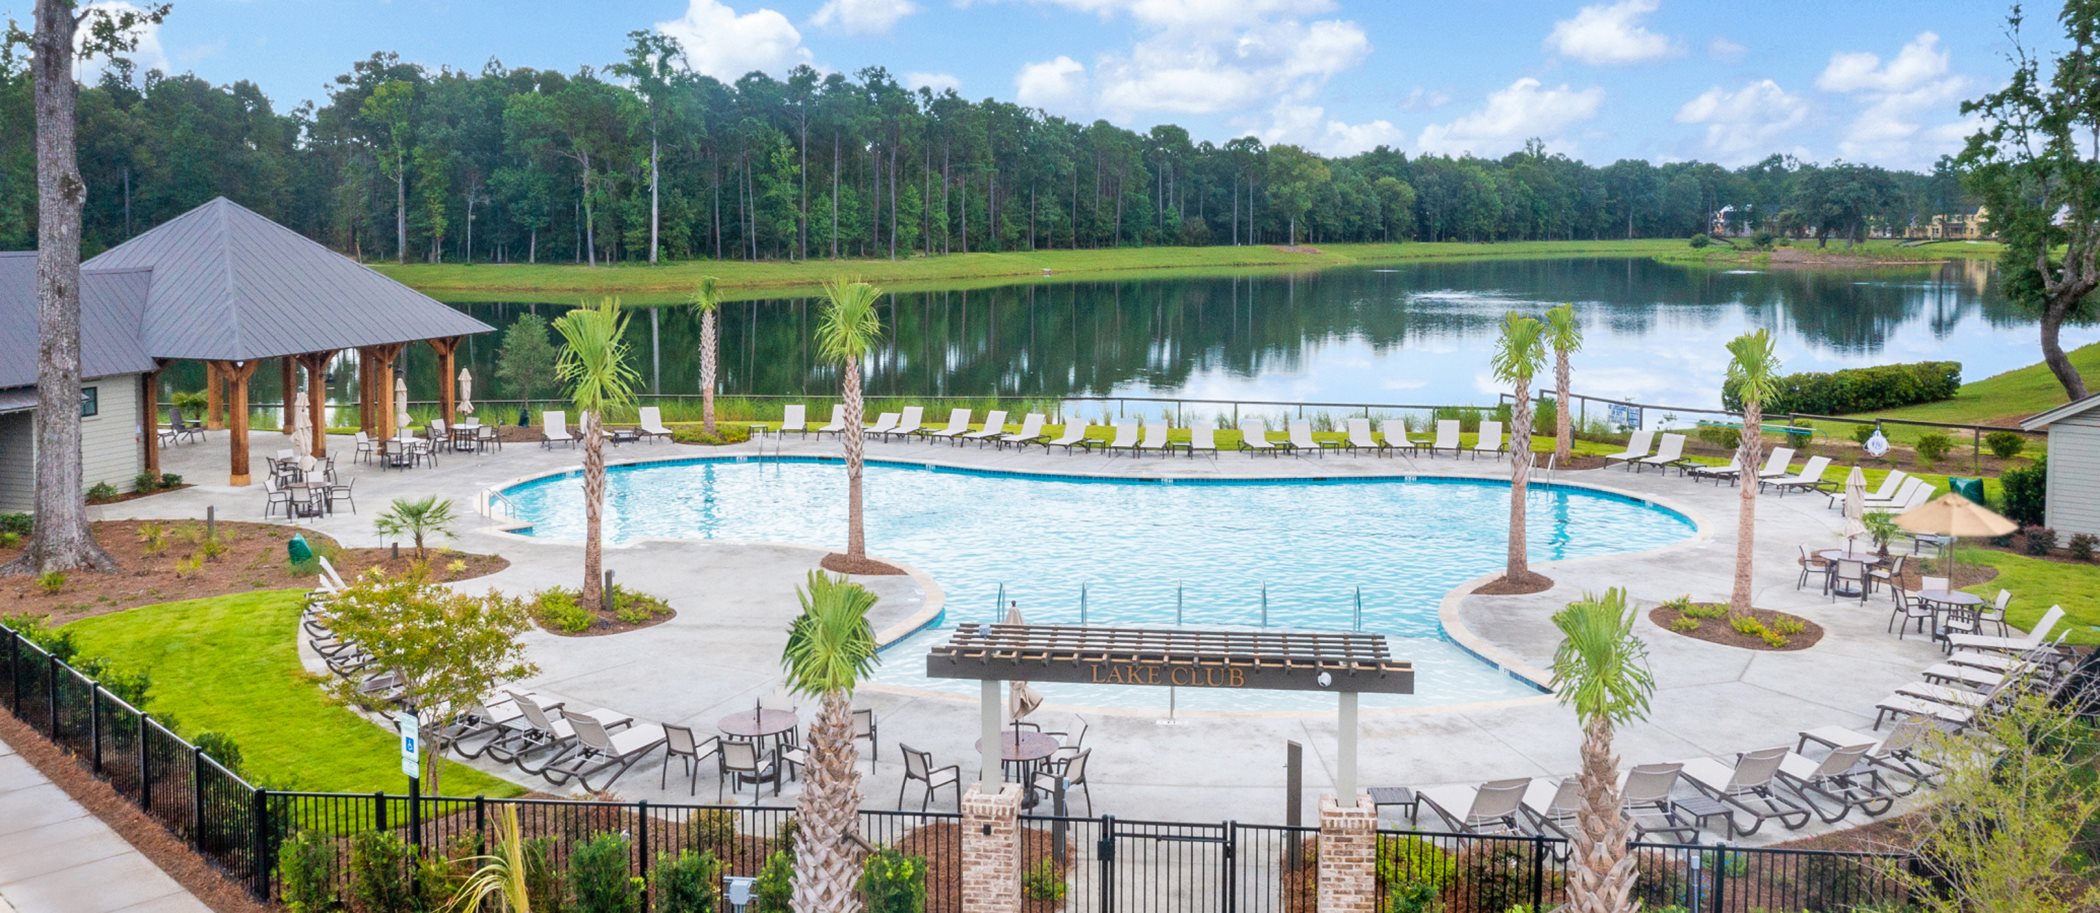 Carolina Park pool